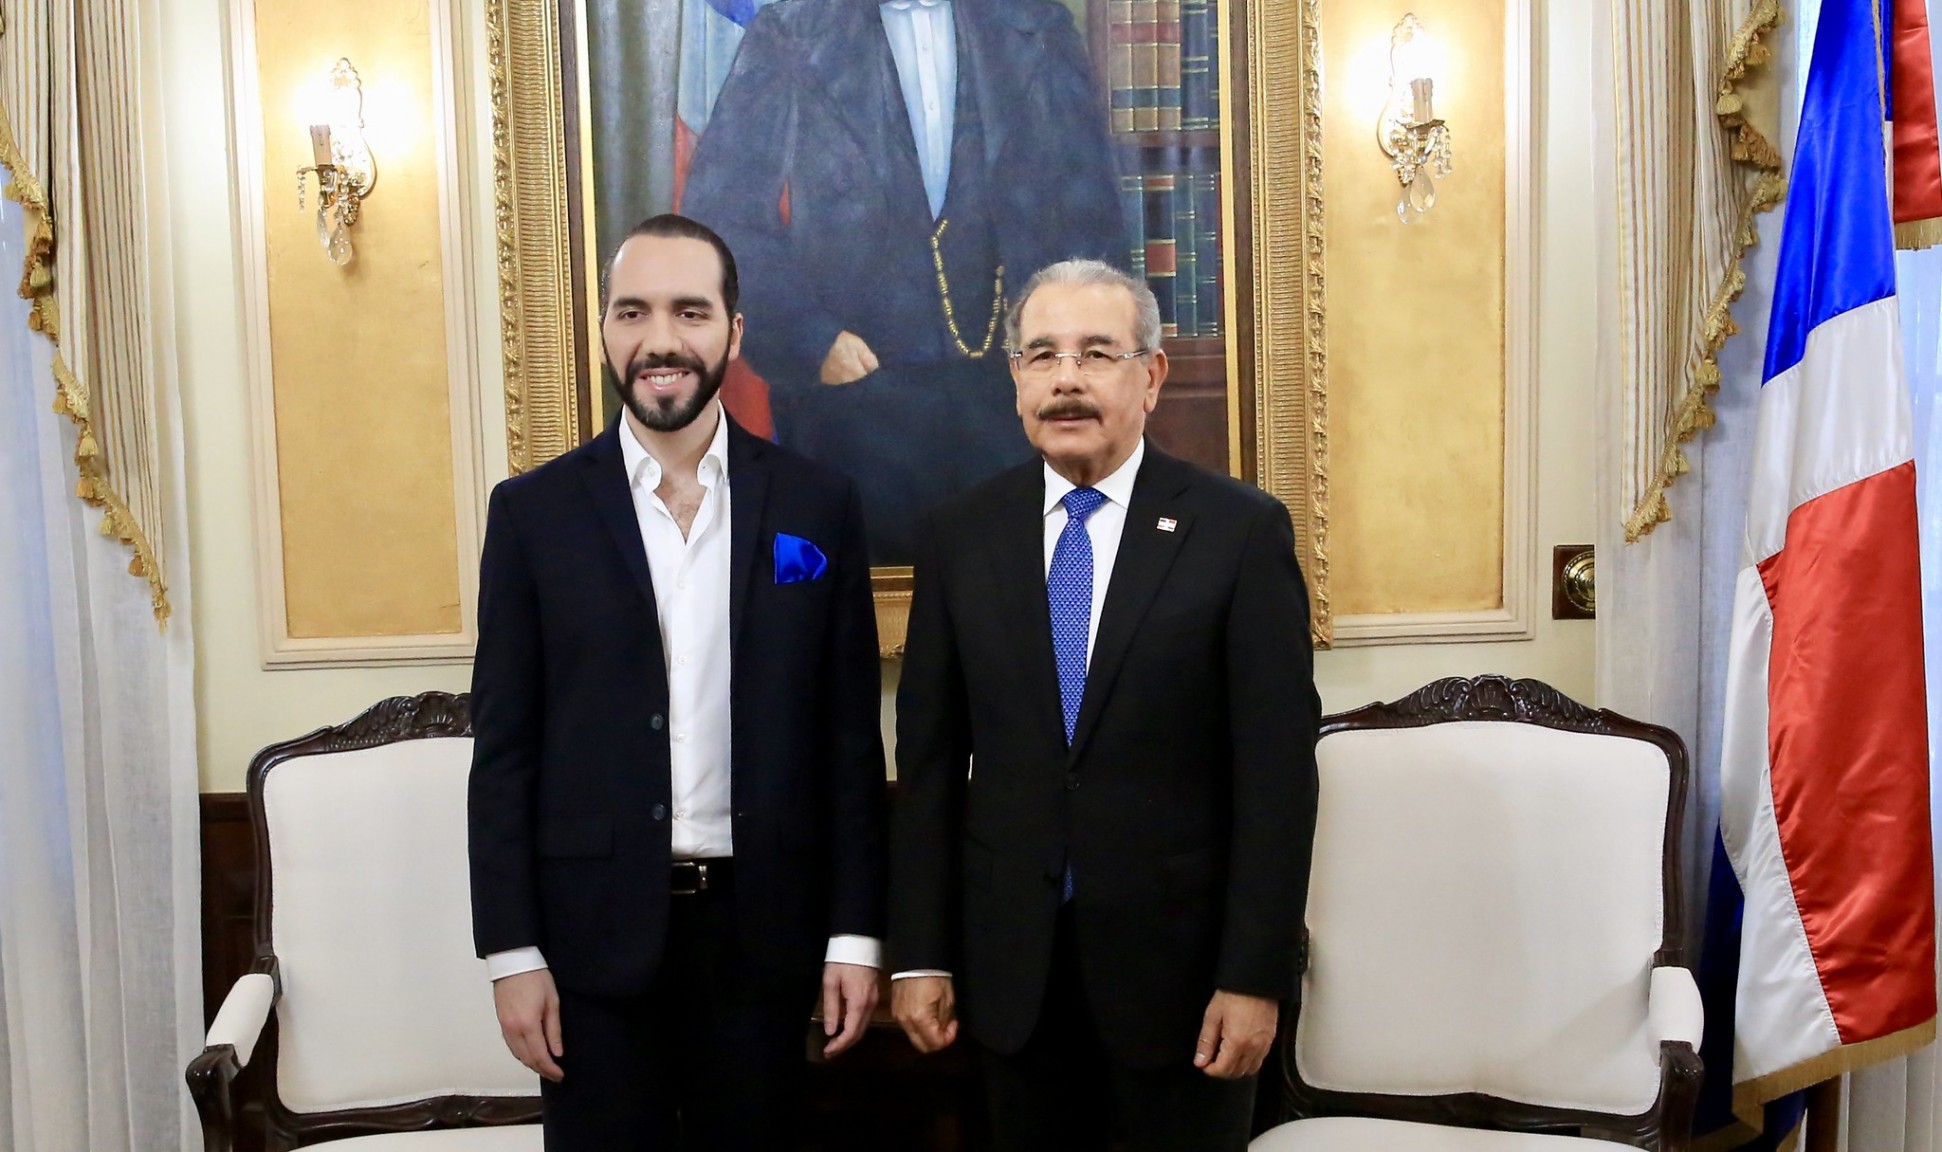 Pdte Bukele de El Salvador gira visita a Danilo Medina: quiere copiar modelo de desarrollo turístico de RD